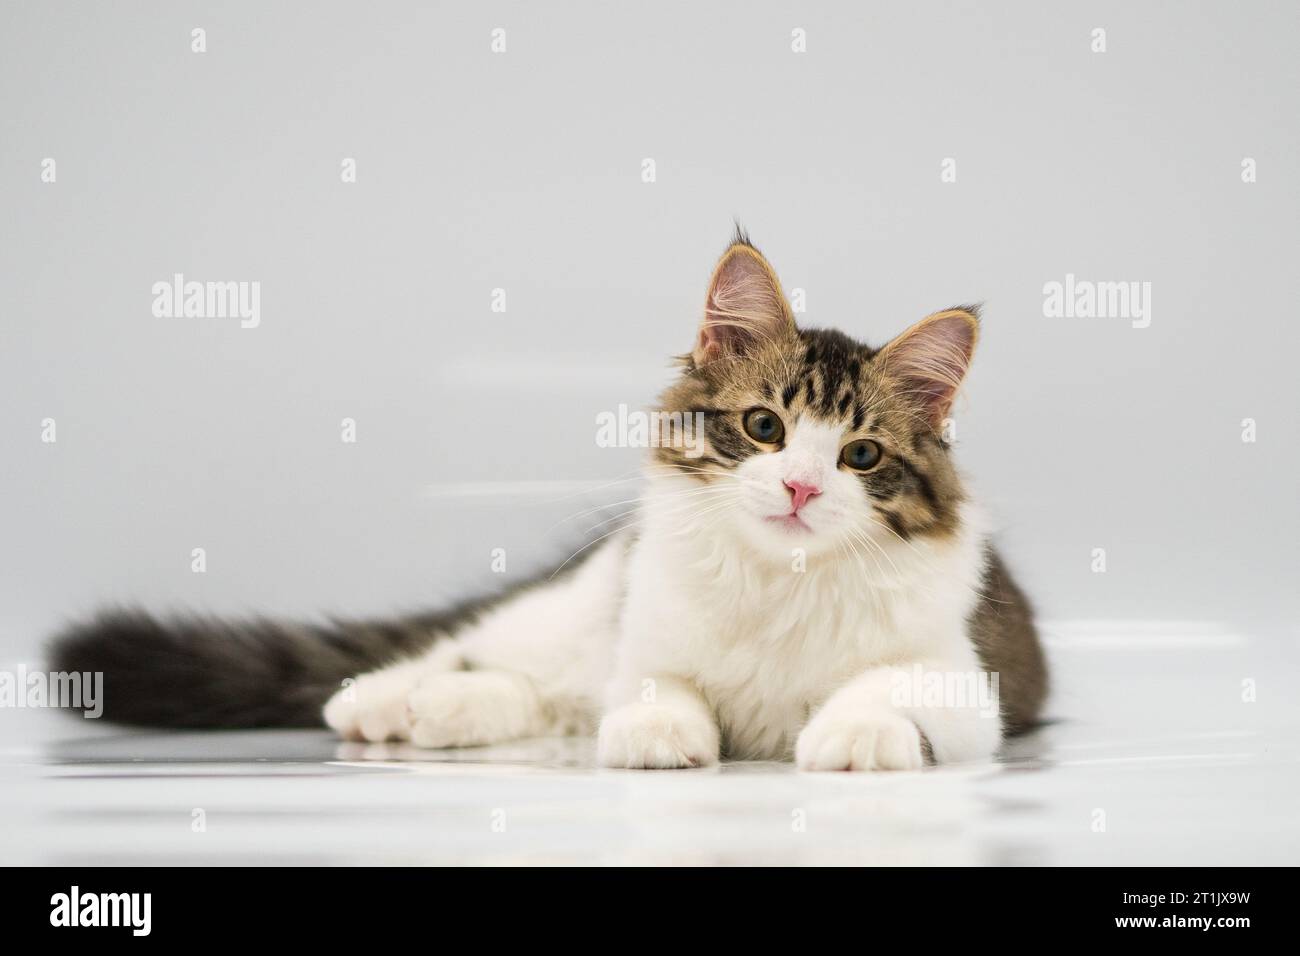 Siberian cat on white backgrounds Stock Photo